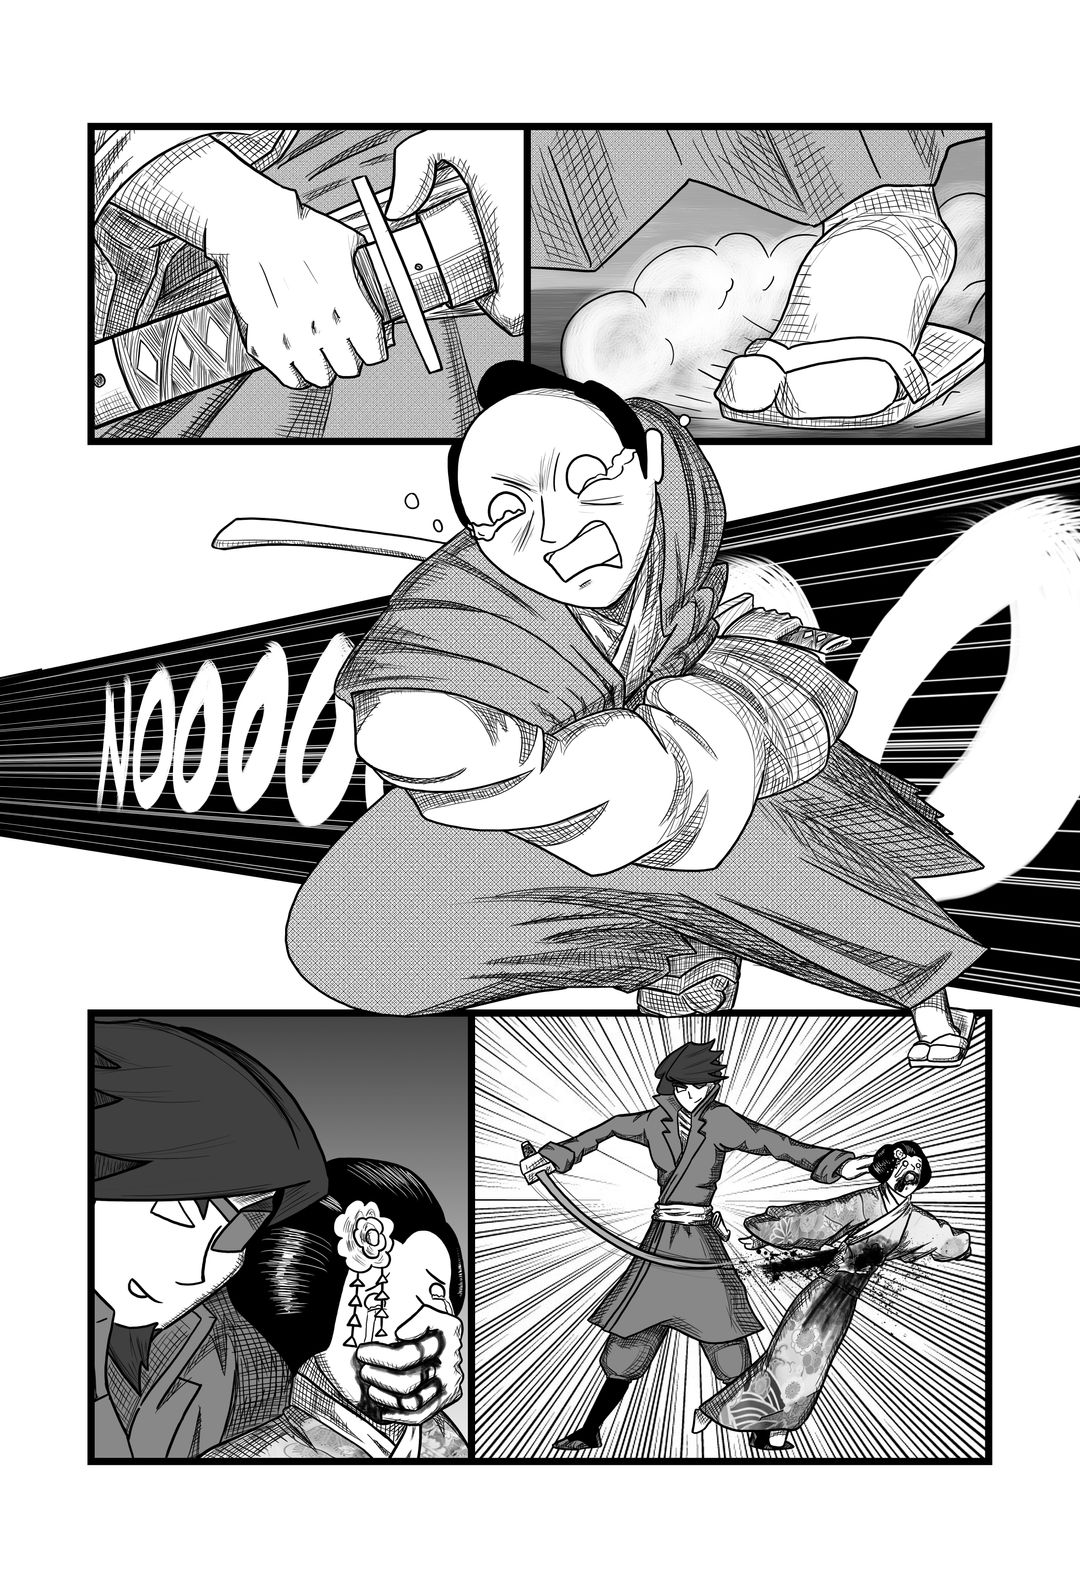 Shotgun Samurai 17 panel 5